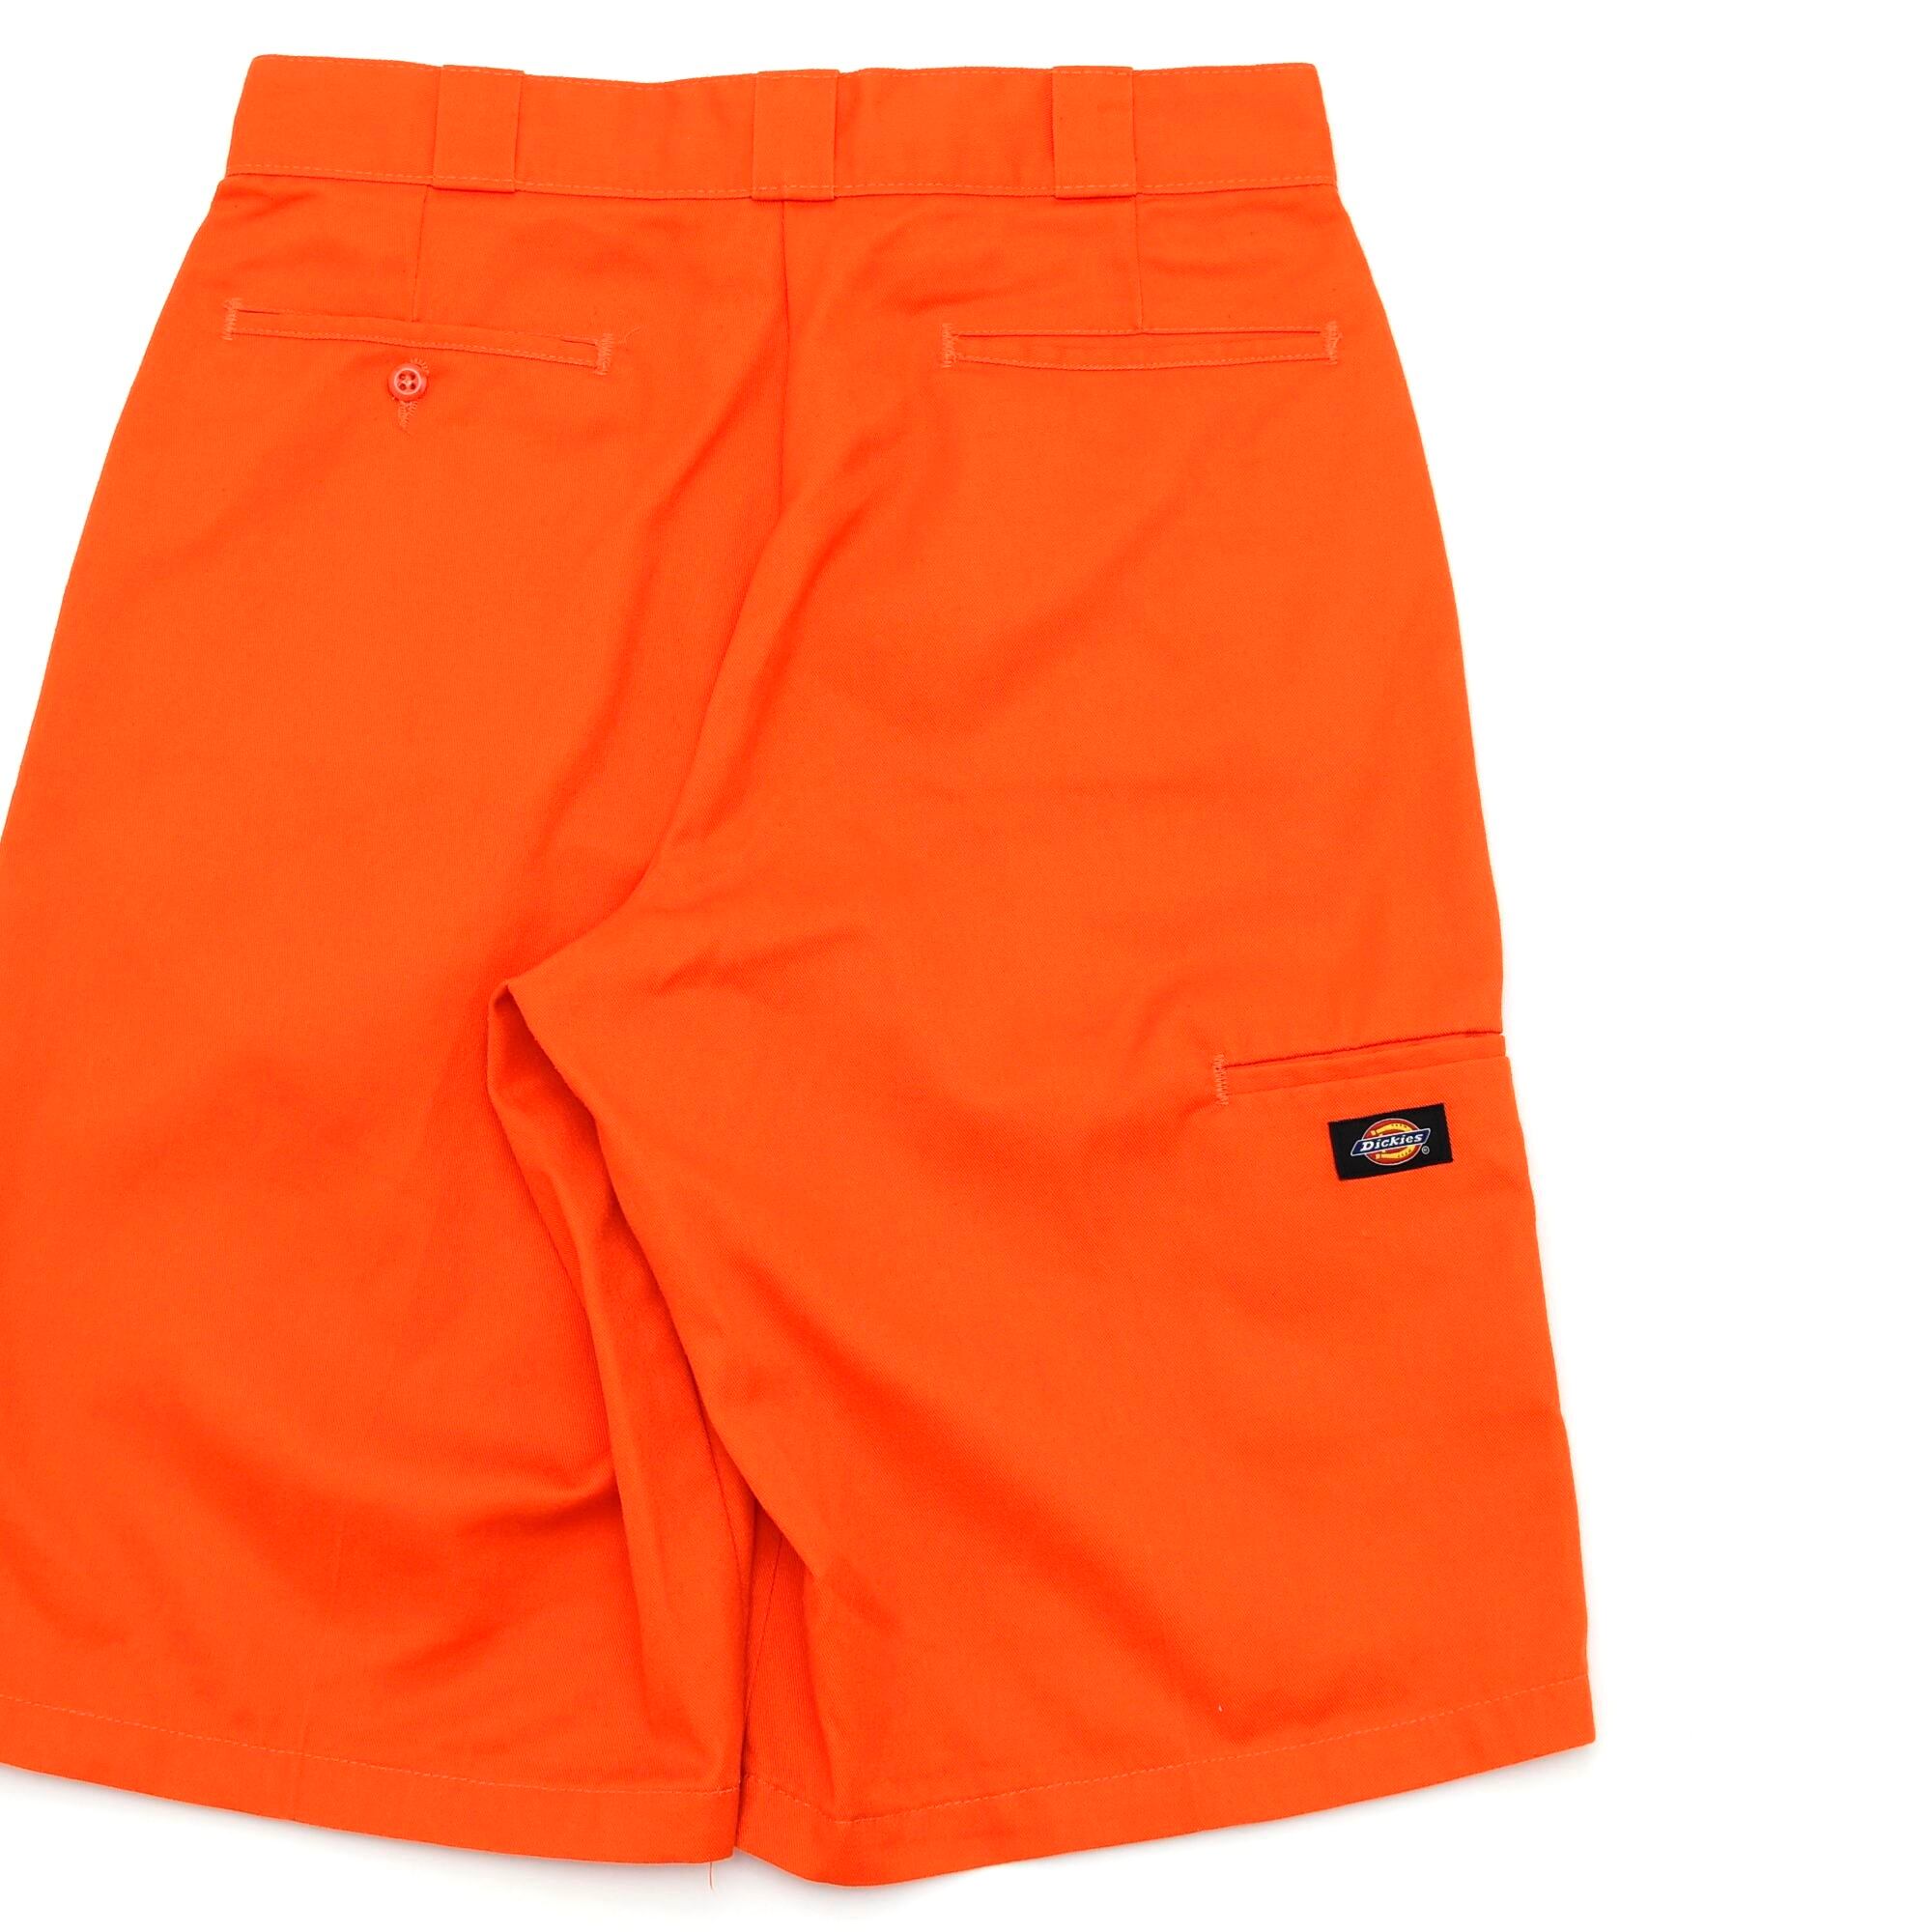 Dickies 13inch orange color work shorts